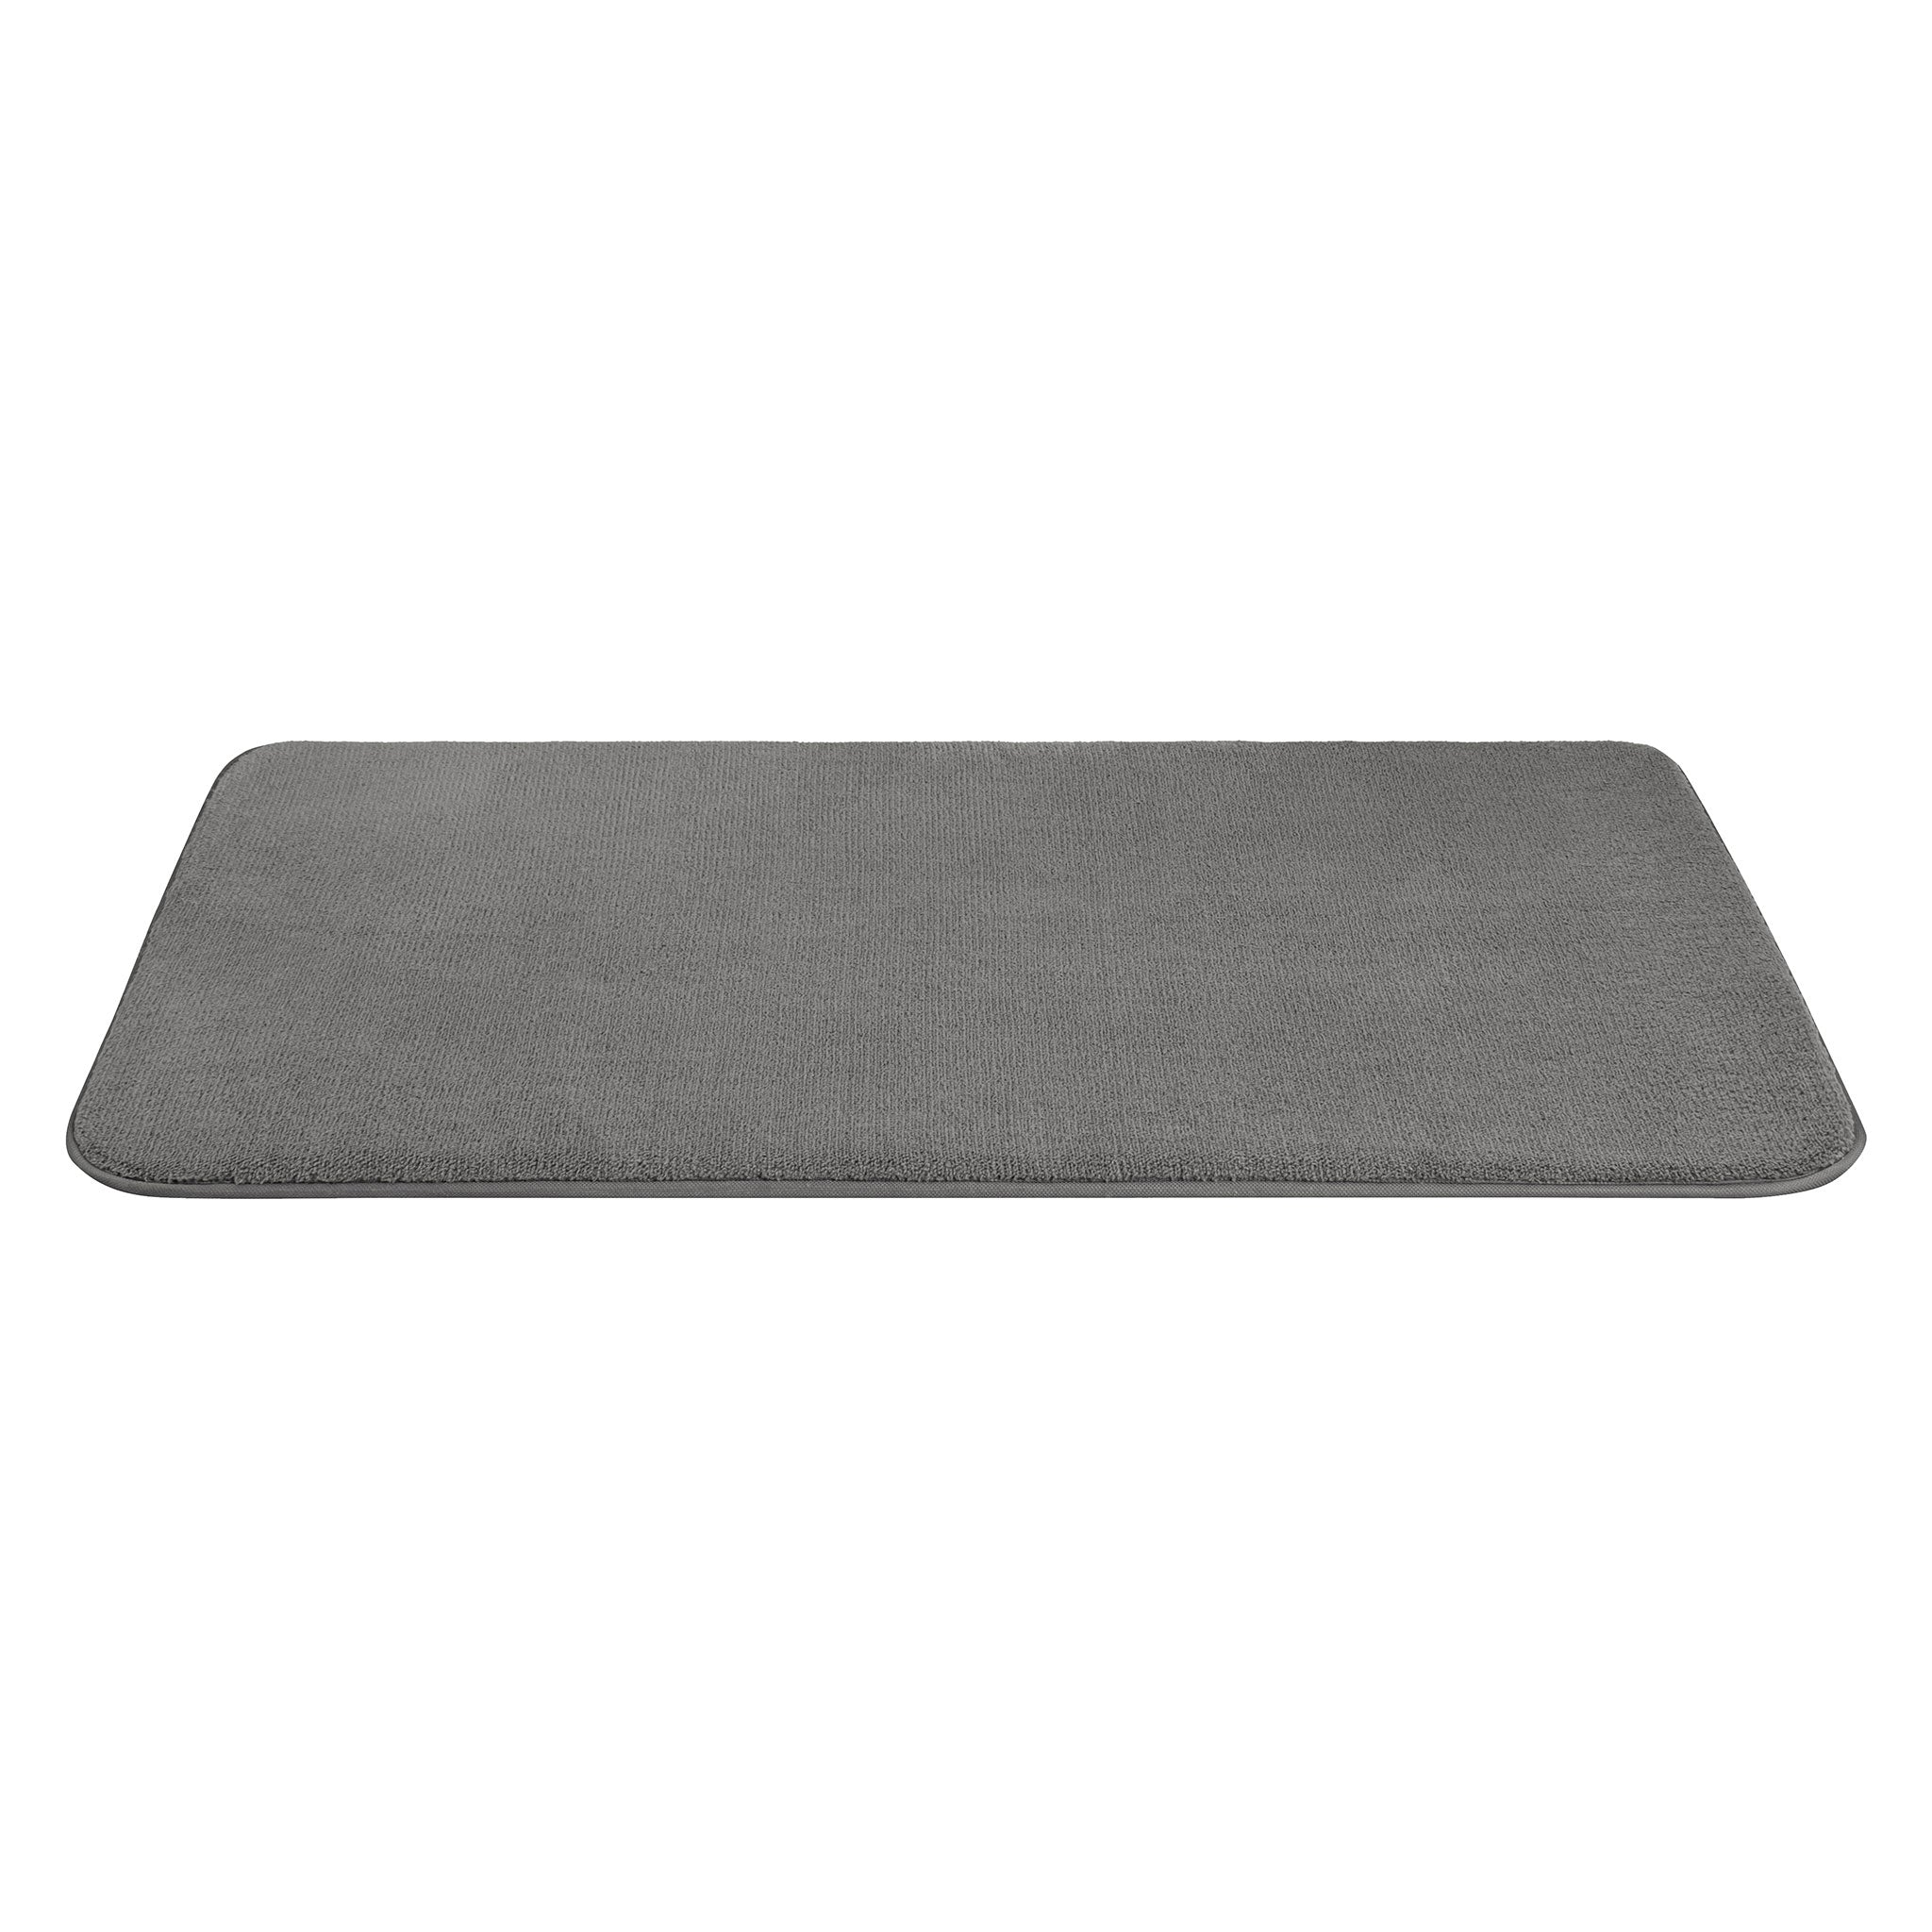 American Soft Linen - Fluffy Foamed Non-Slip Bath Rug-21x32 Inch - Gray - 6